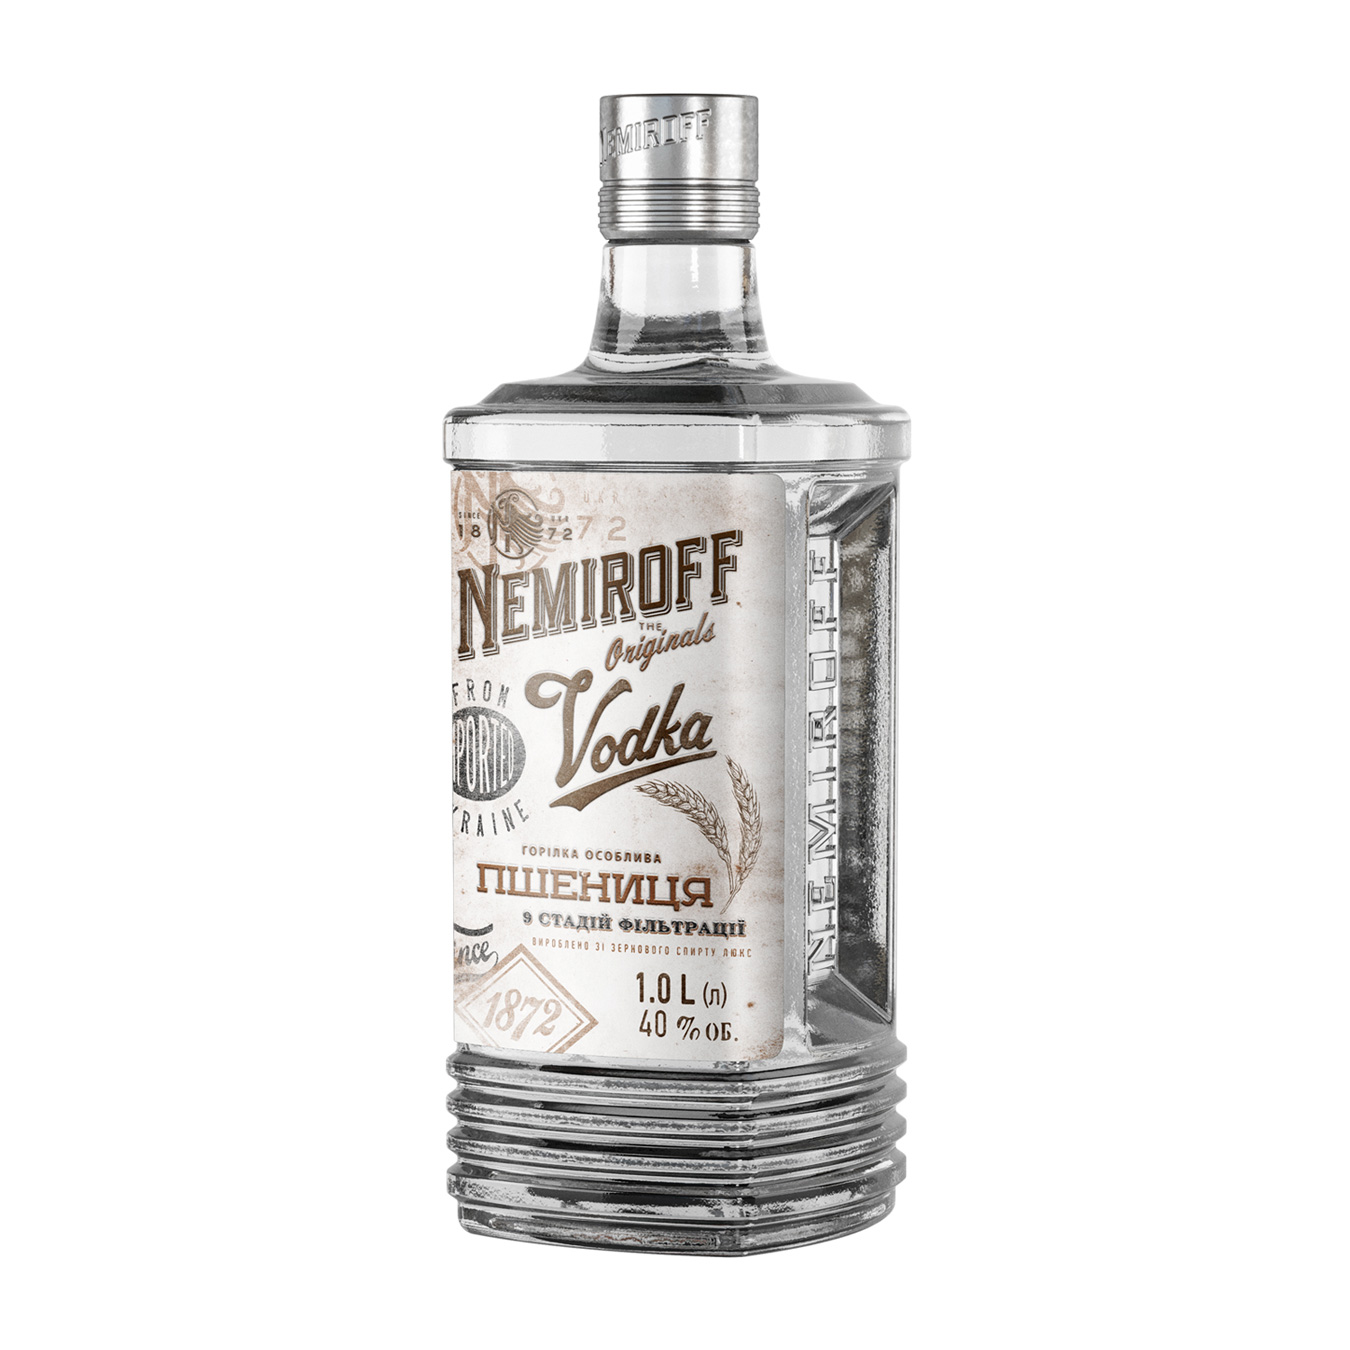 from 40% price ᐈ Novus Wheat at Vodka Nemiroff a Buy good 1l